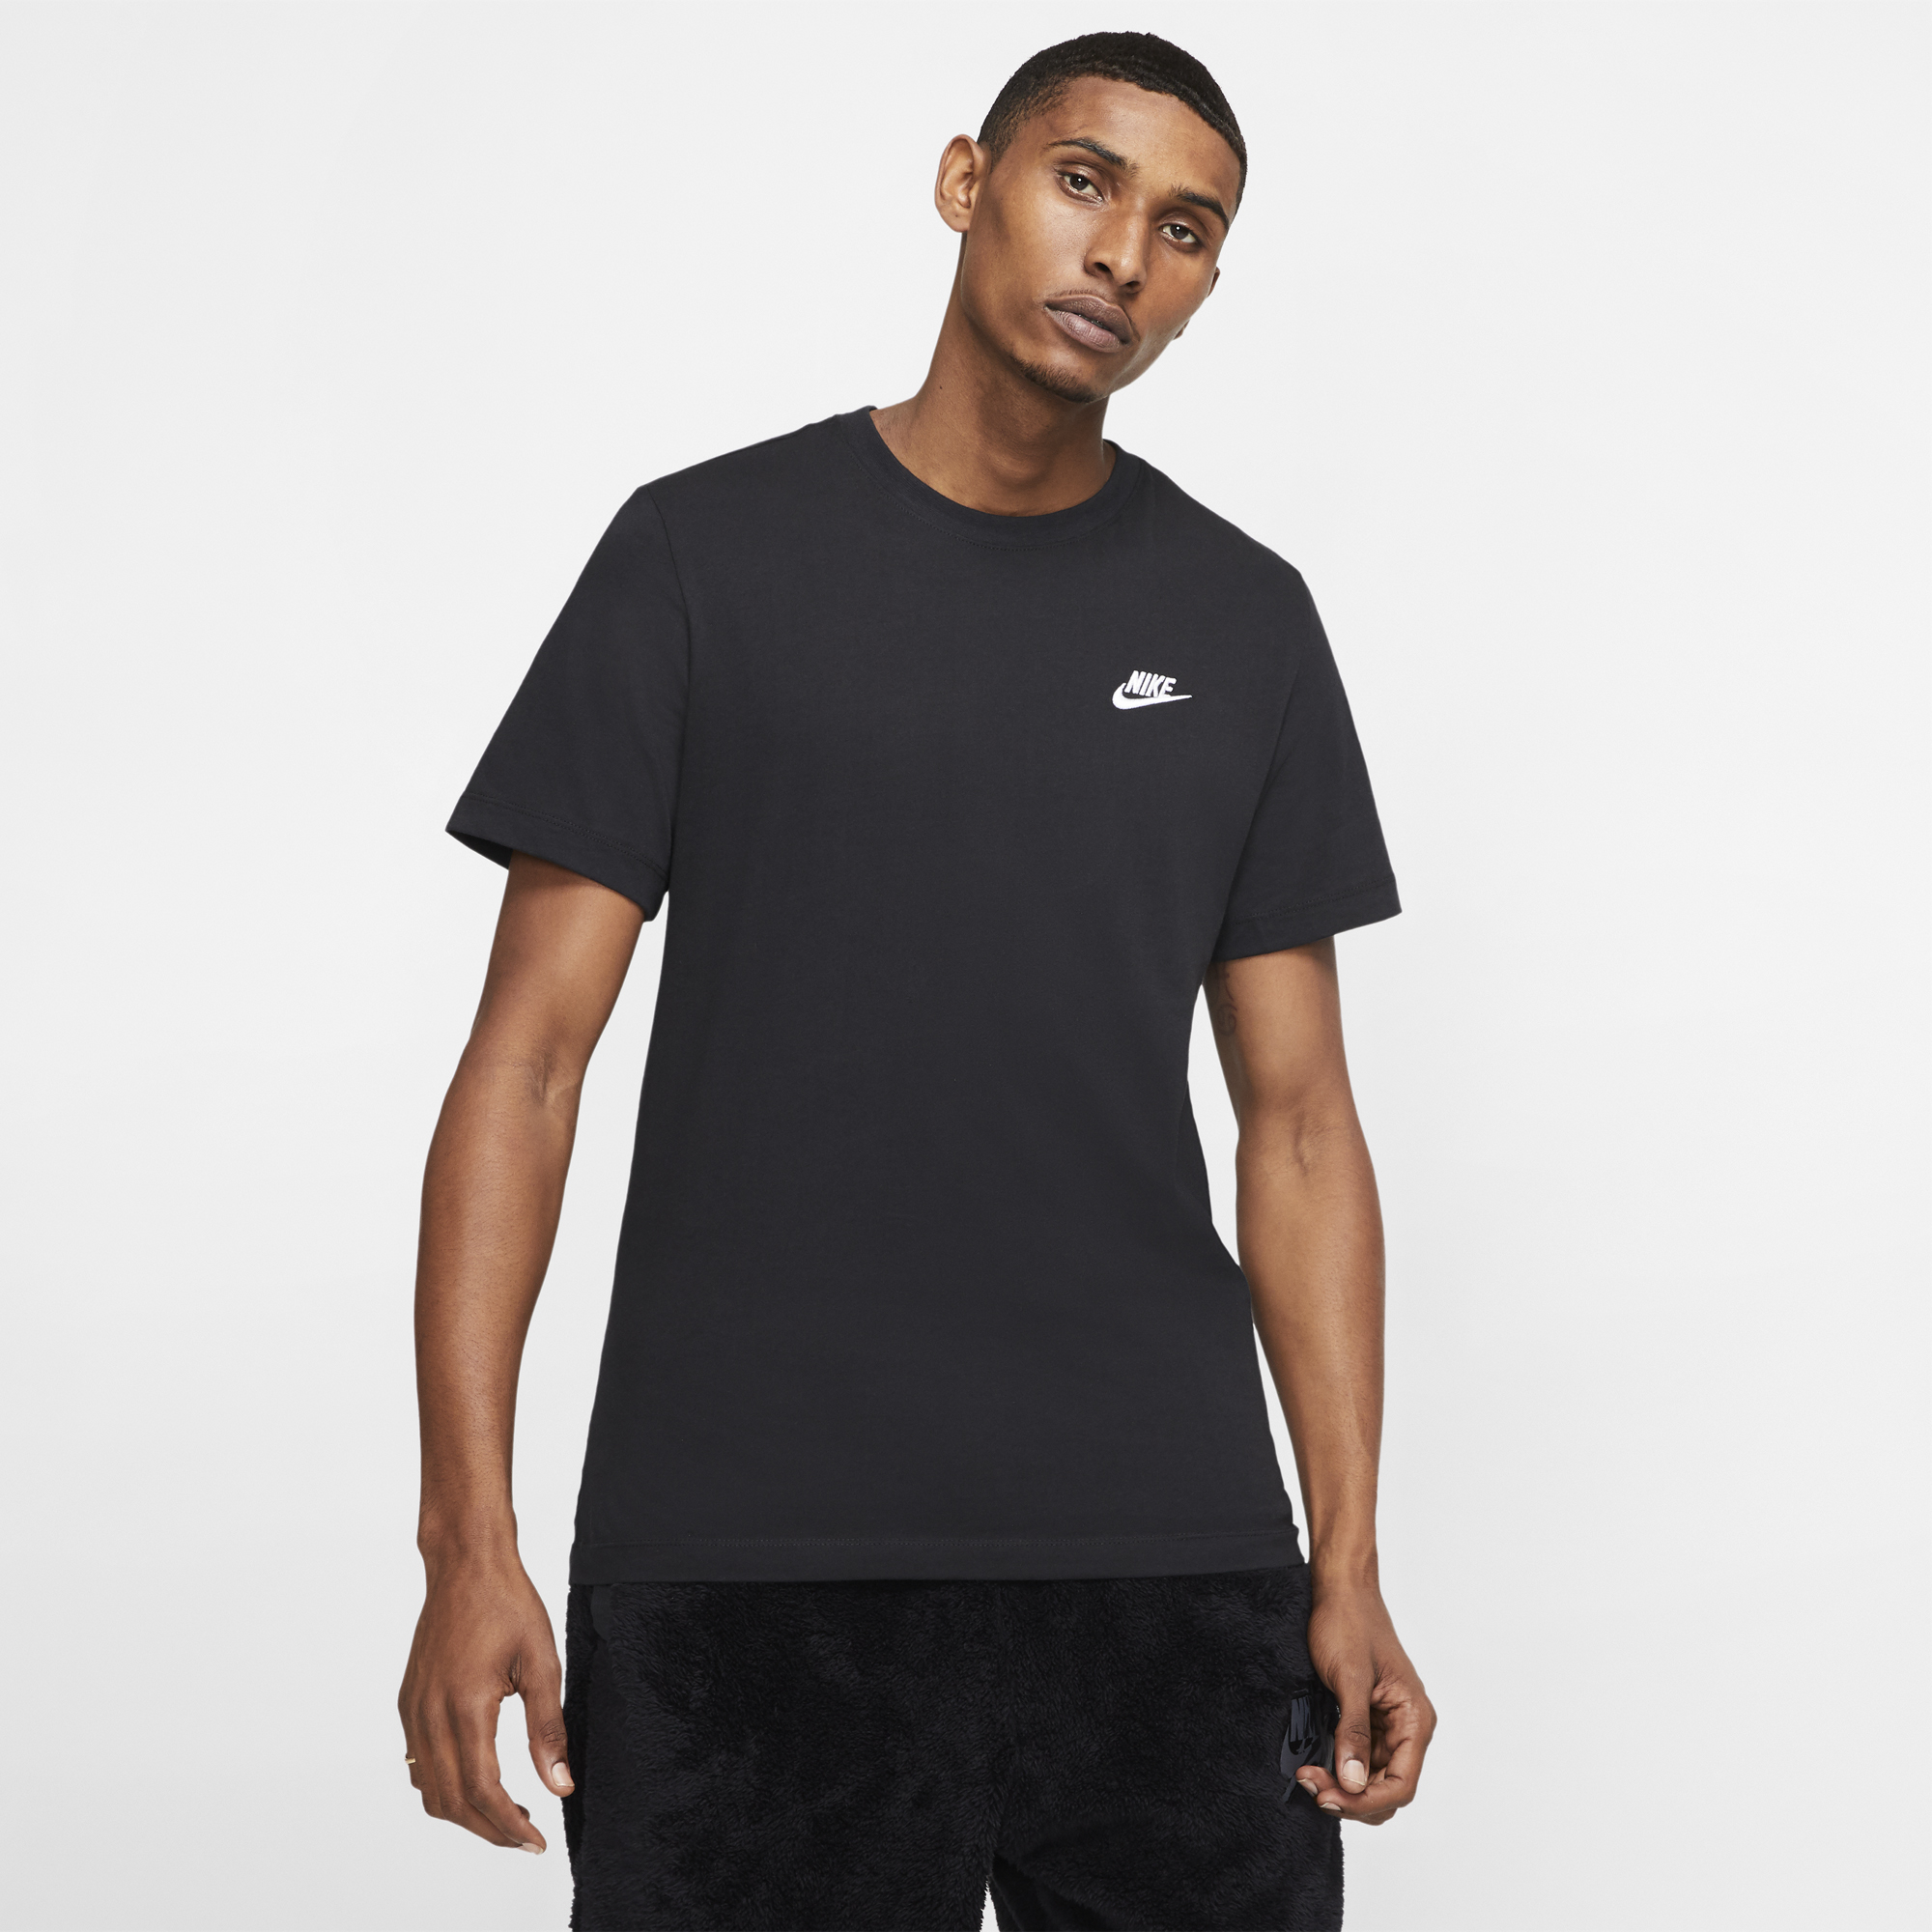 débiles desvanecerse Sumamente elegante Nike Embroidered Futura T-Shirt | Champs Sports